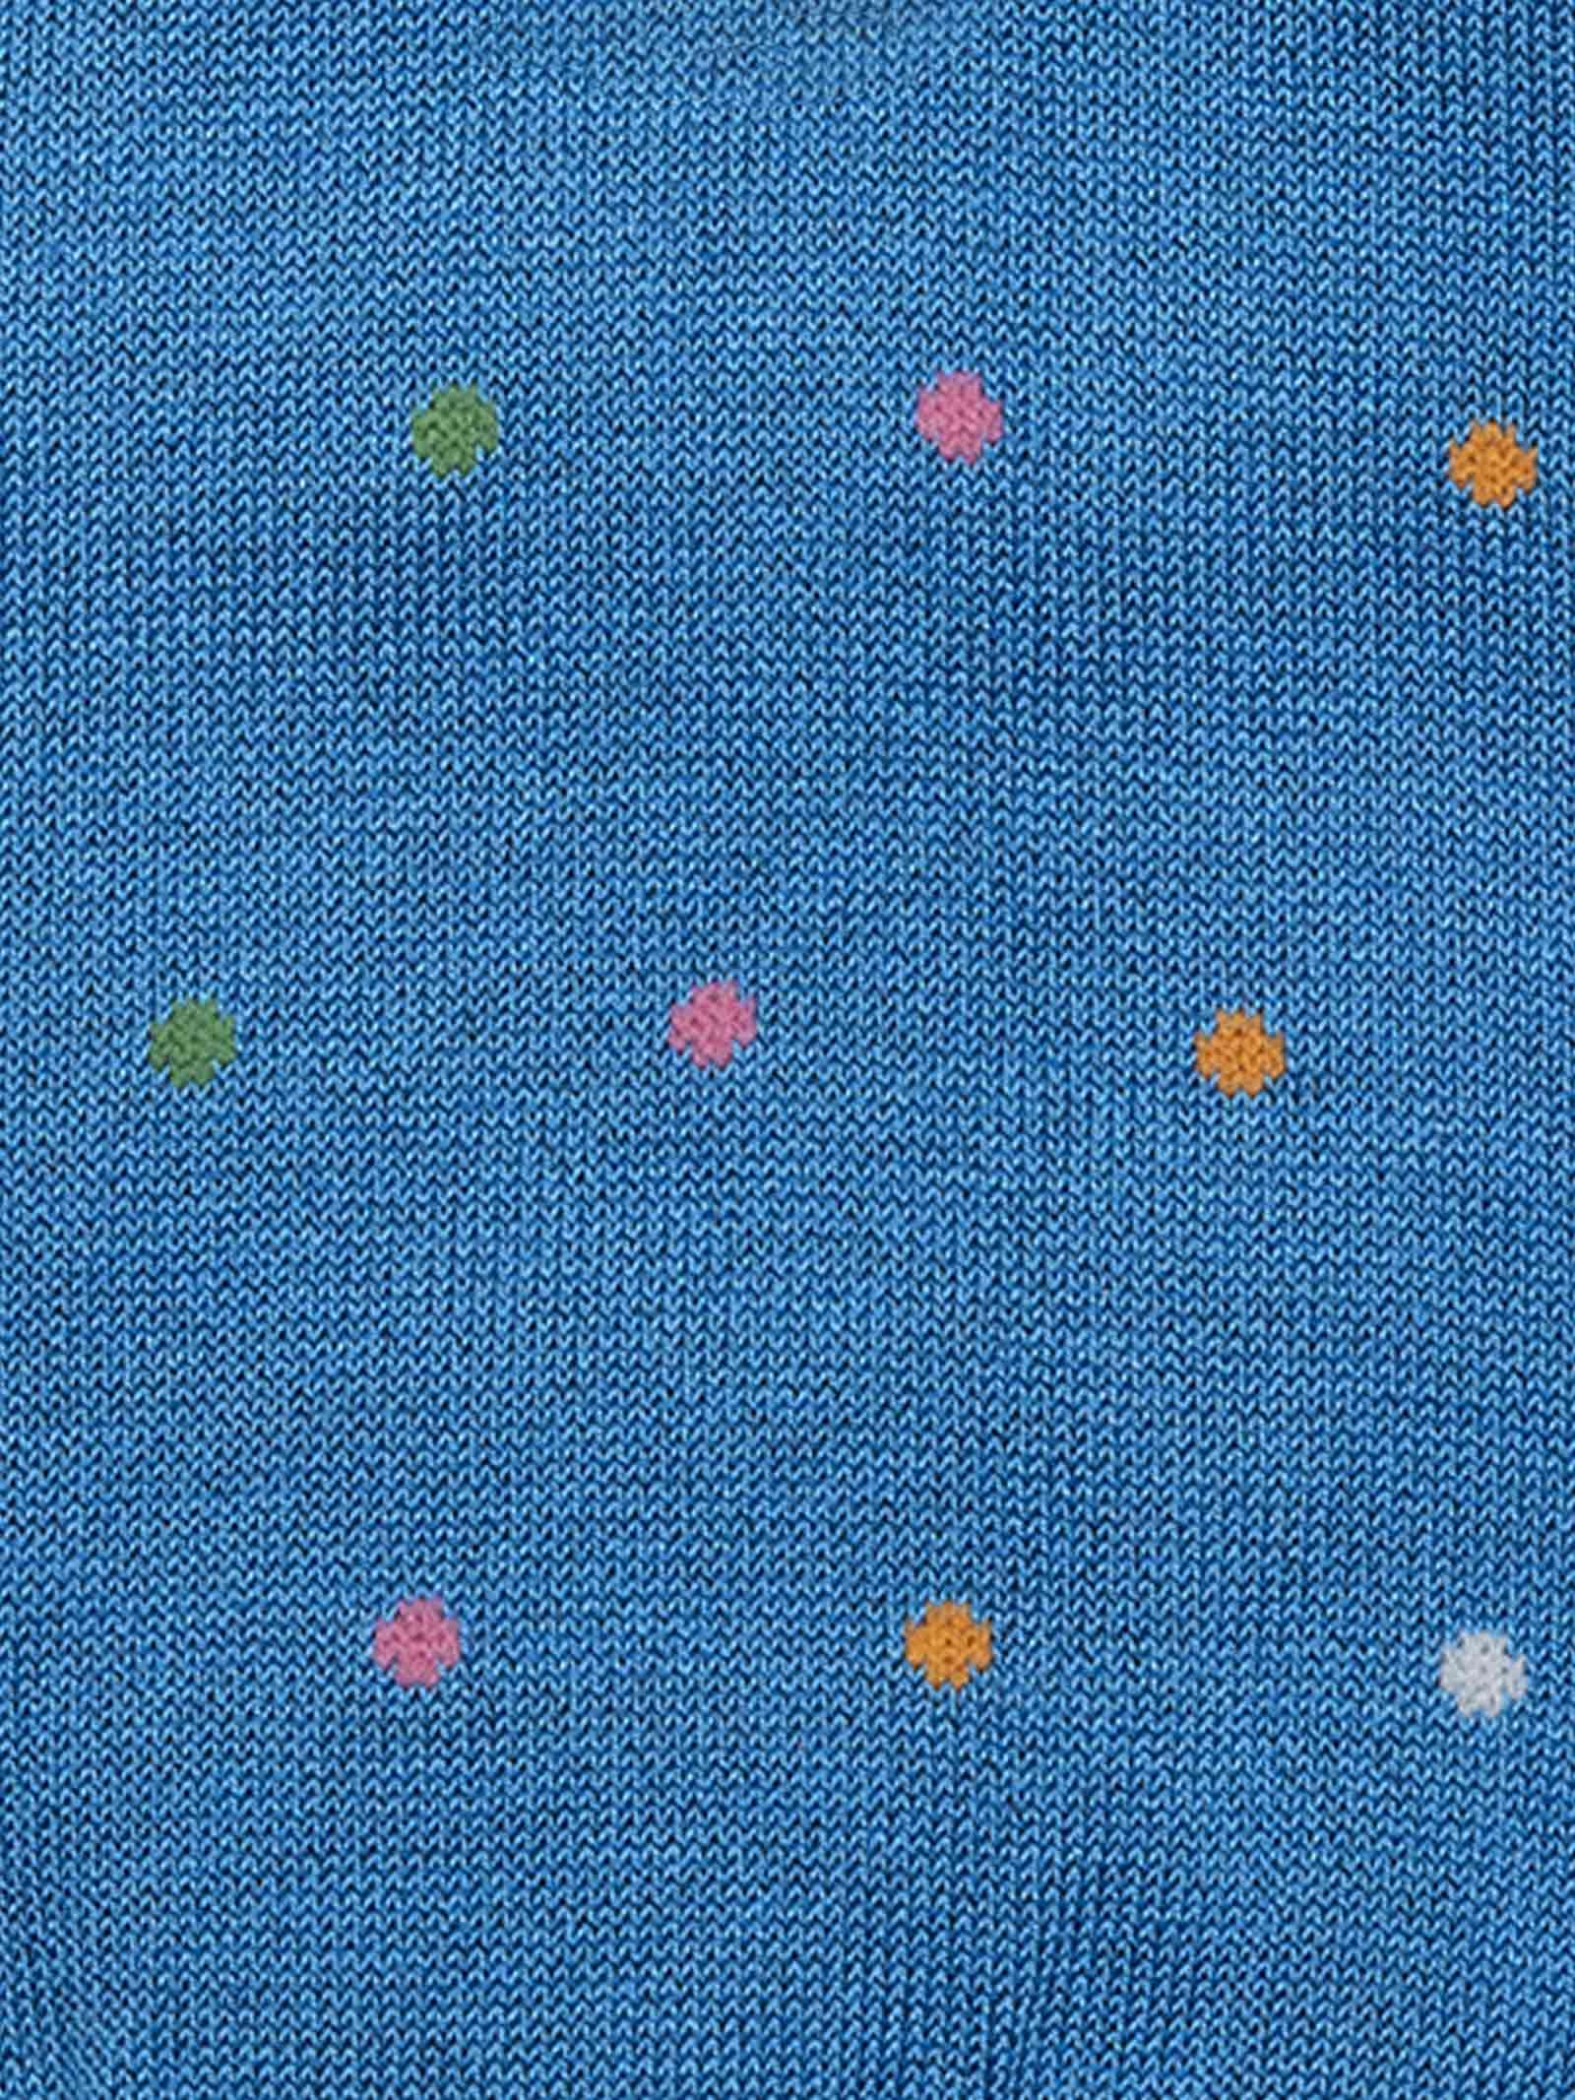 Multicolor polka dot patterned men's short socks in cool cotton - Made in Italy